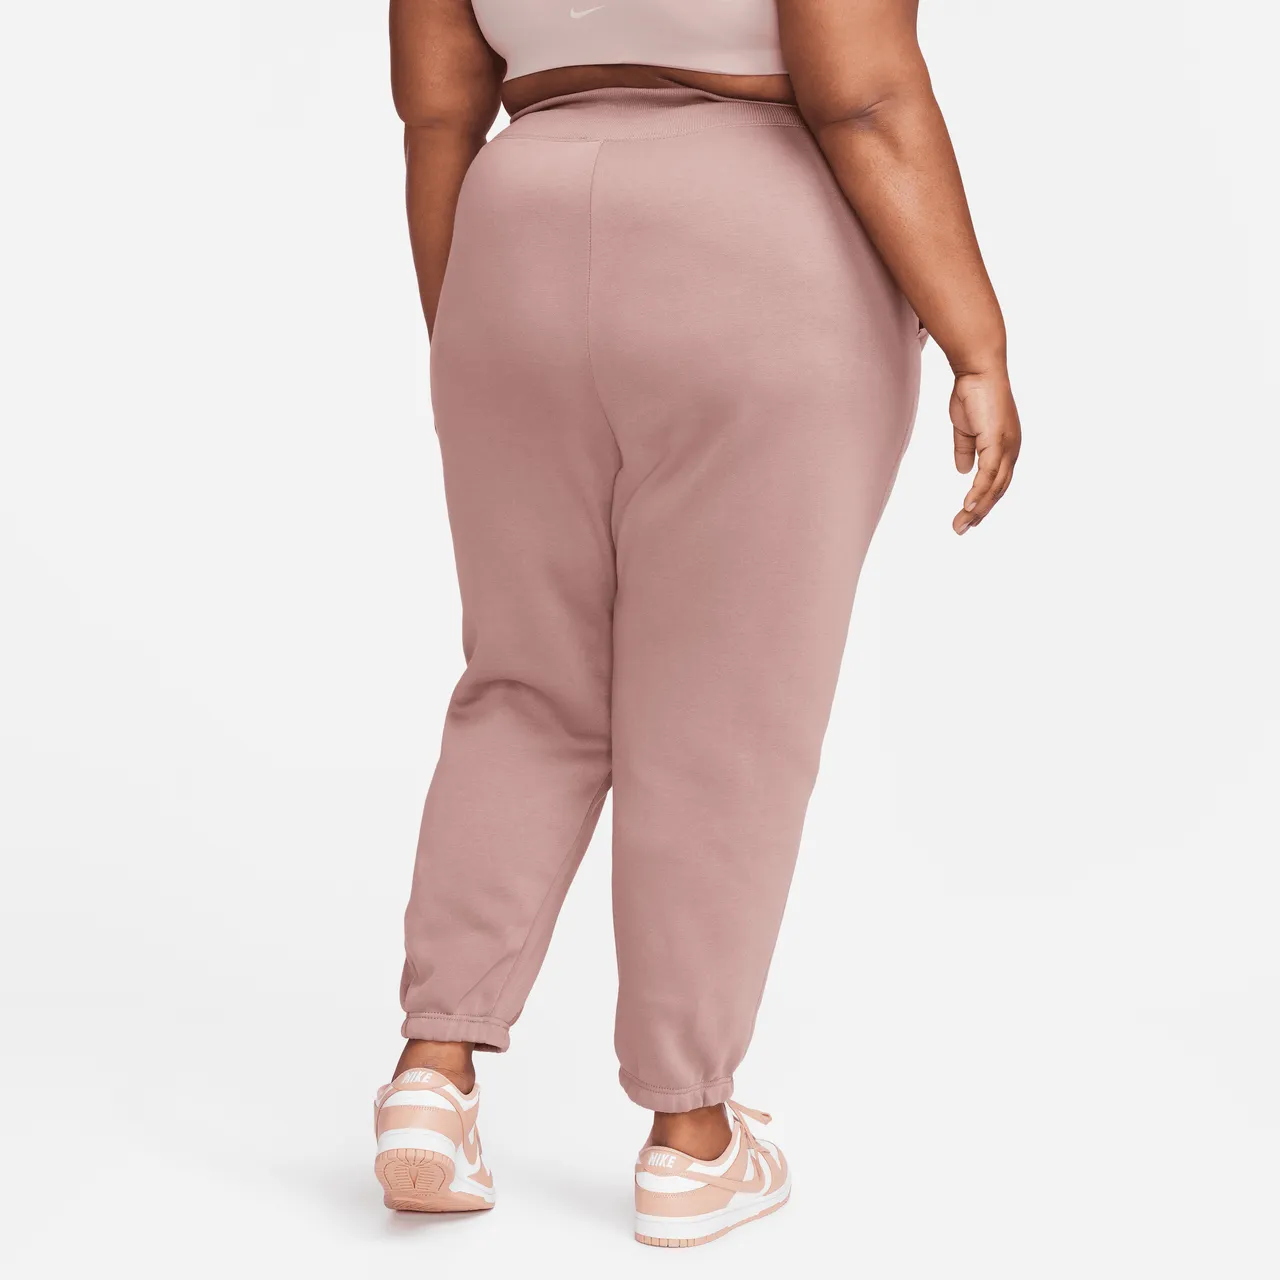 Nike Sportswear Phoenix Fleece Oversized joggingbroek met hoge taille voor dames (Plus Size) - Paars